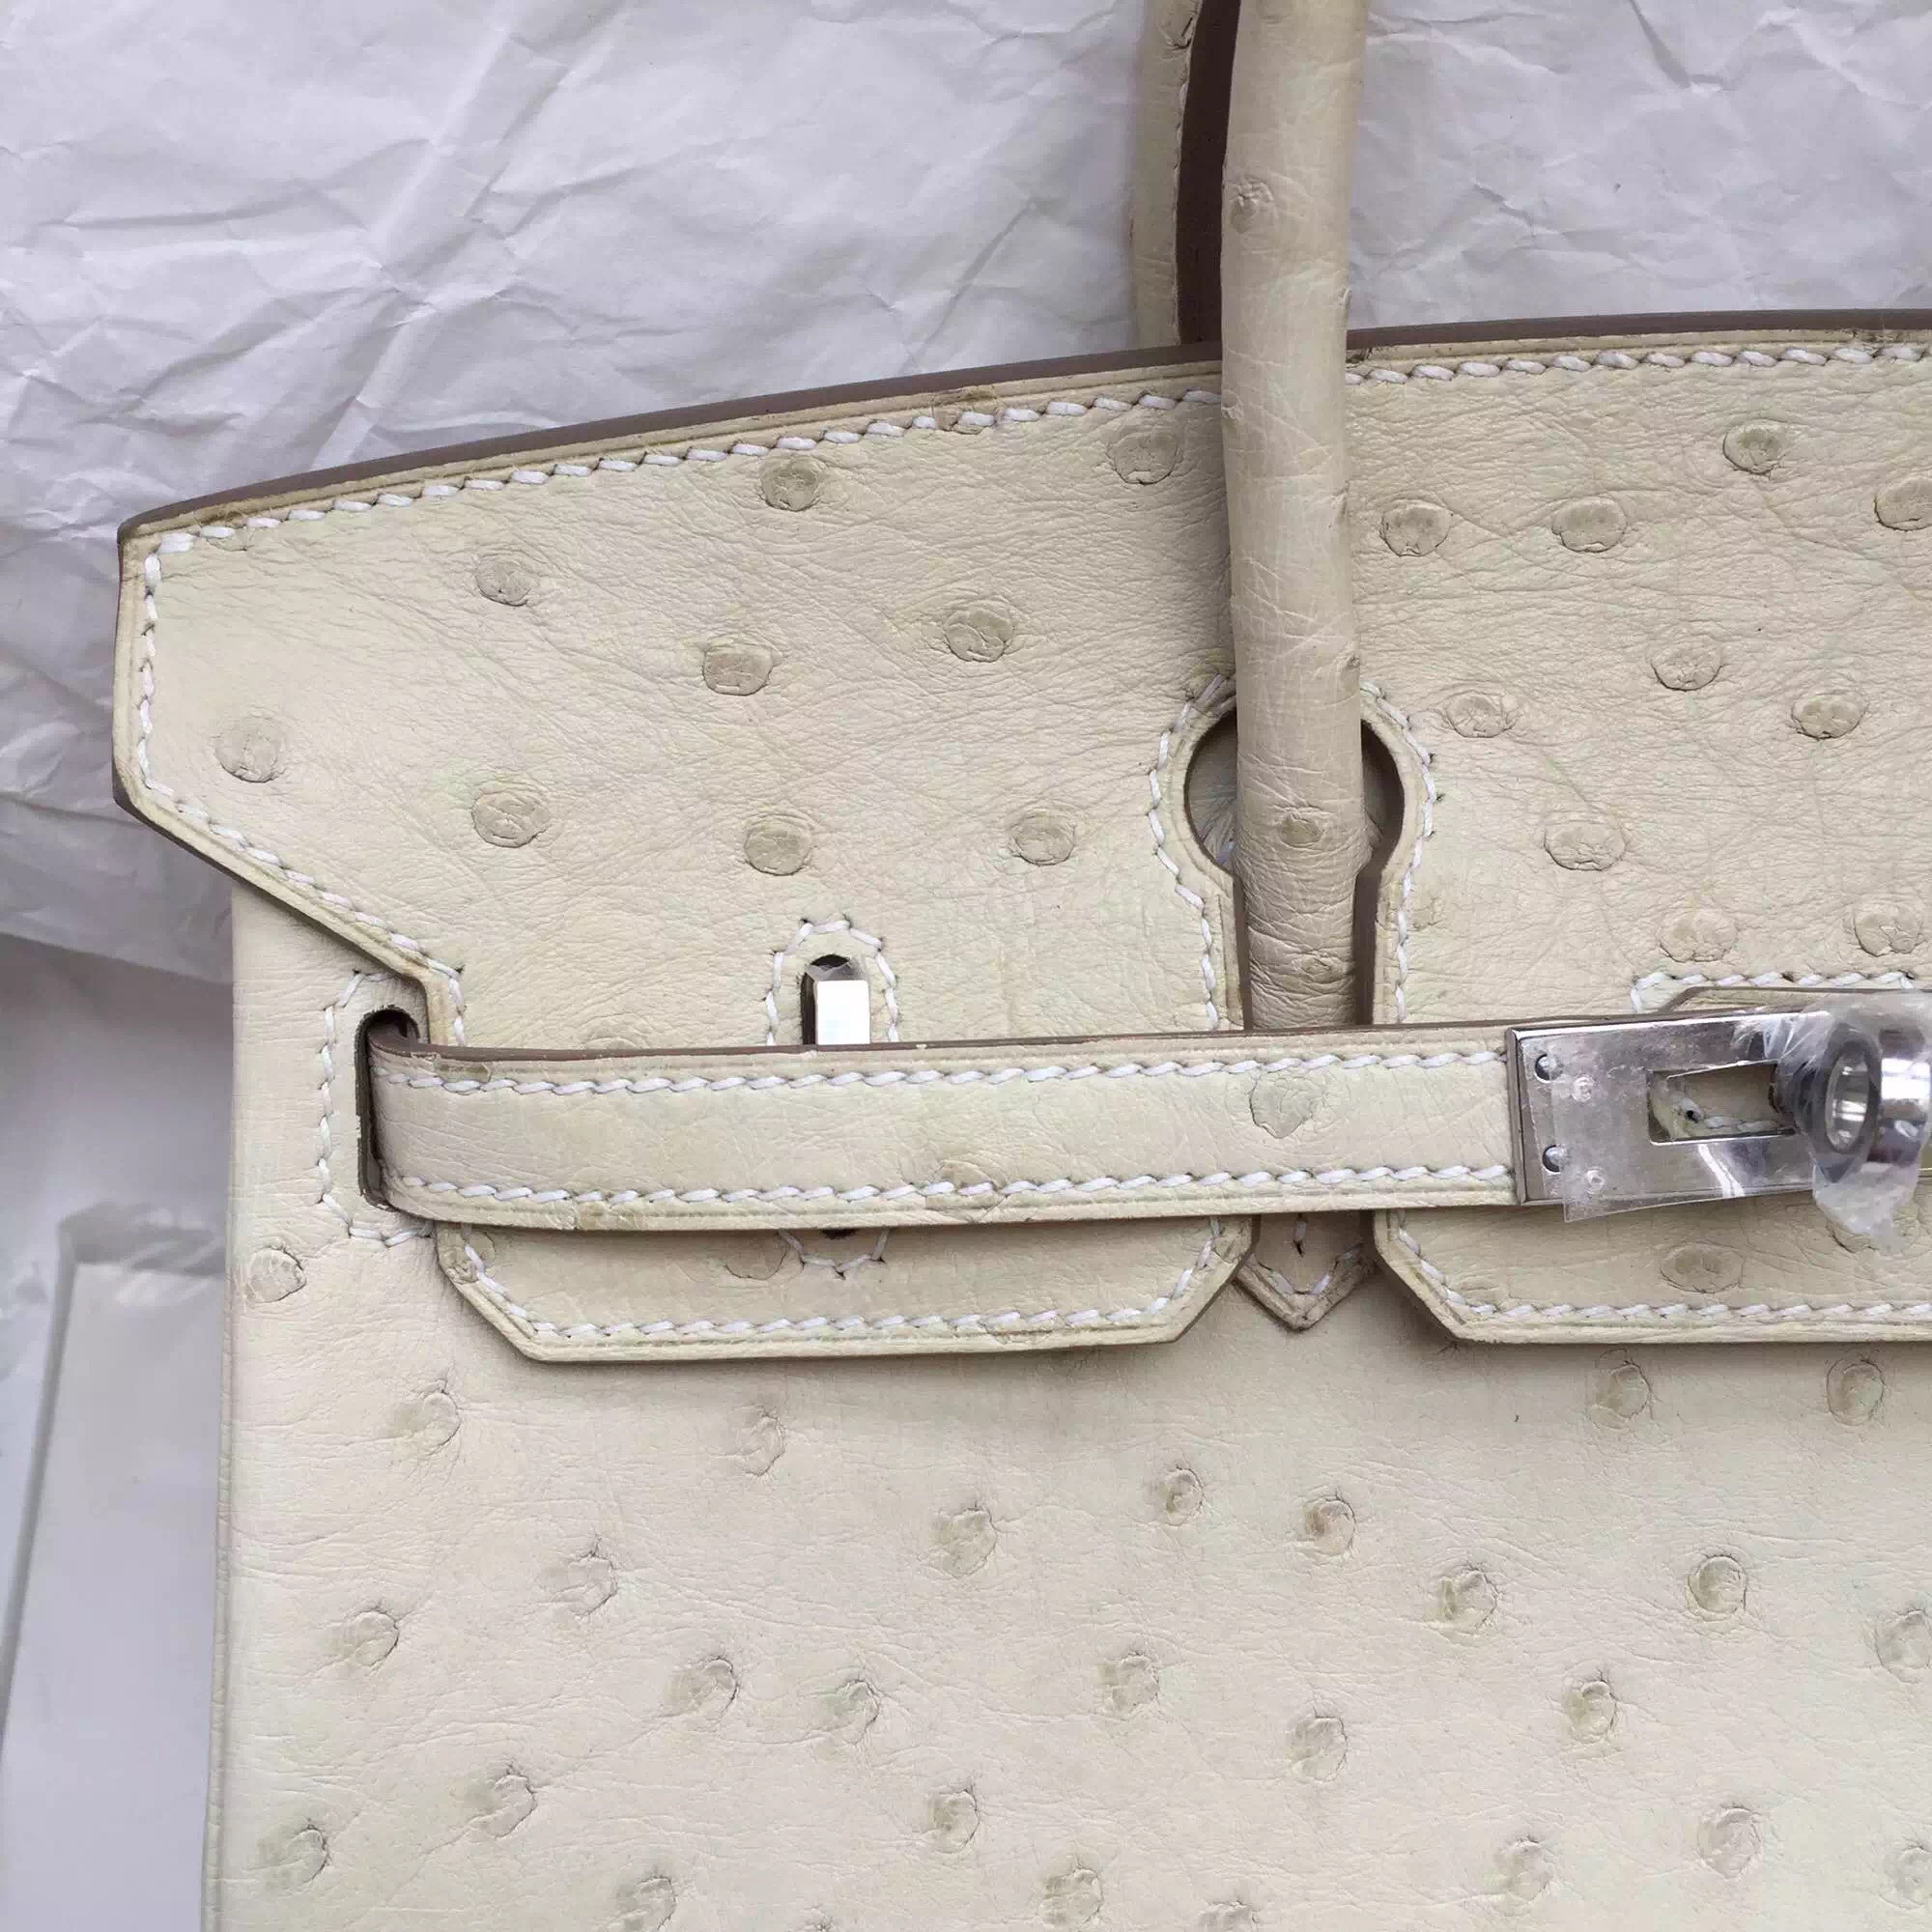 25CM Wool White Ostrich Leather Hermes Birkin Bag Silver Hardware Online